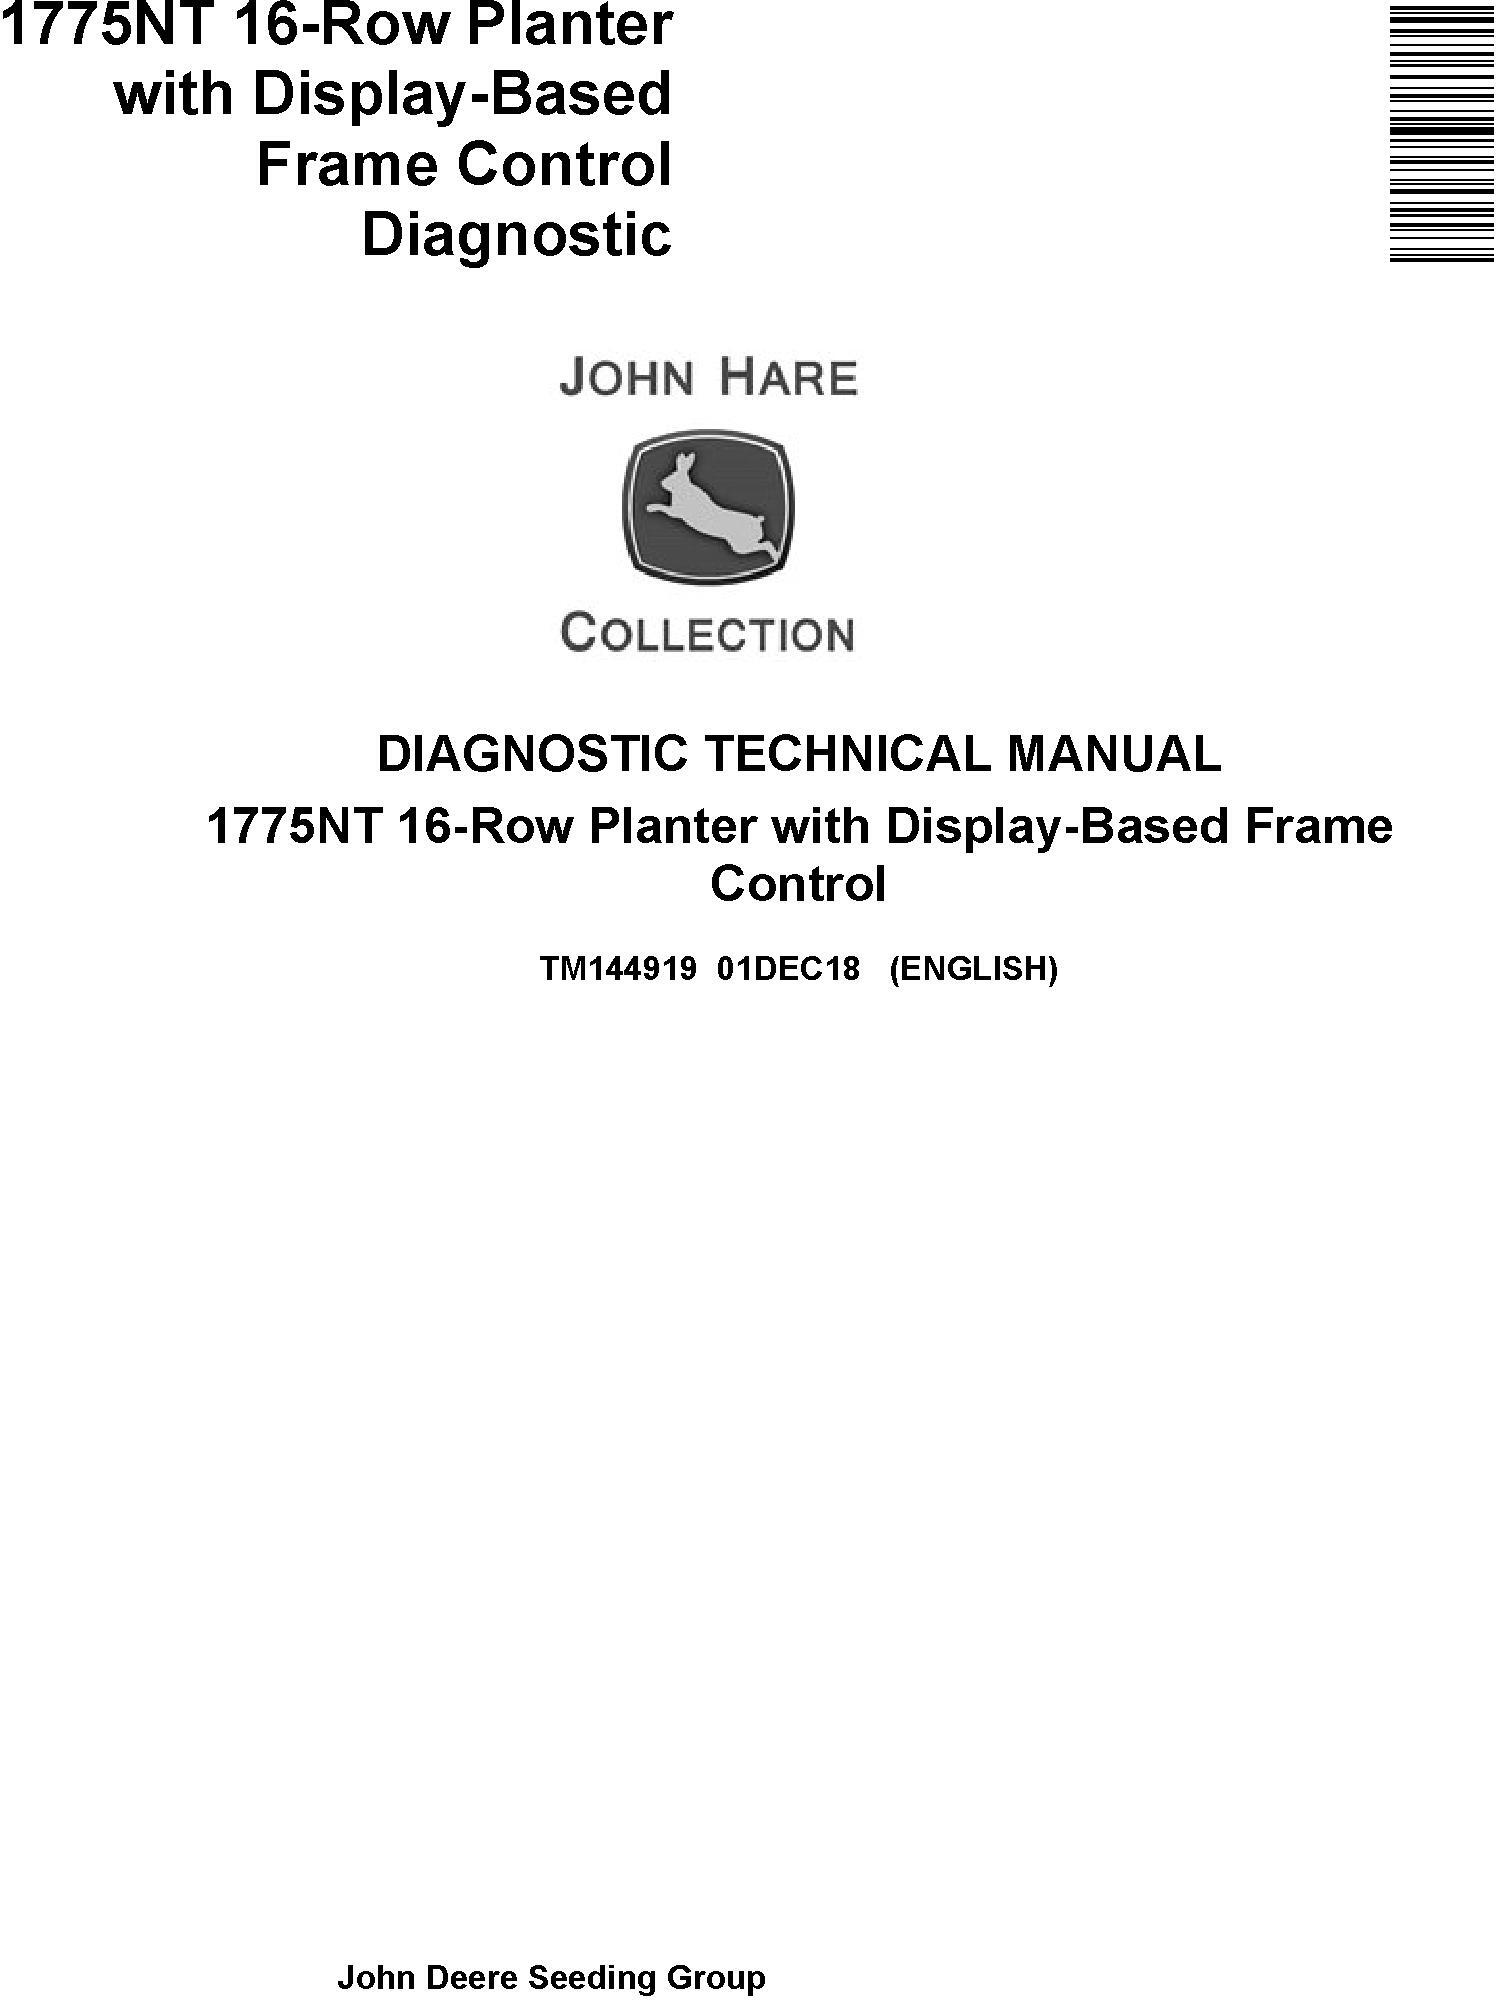 John Deere 1775NT 16-Row Planter Diagnostic Technical Manual TM144919